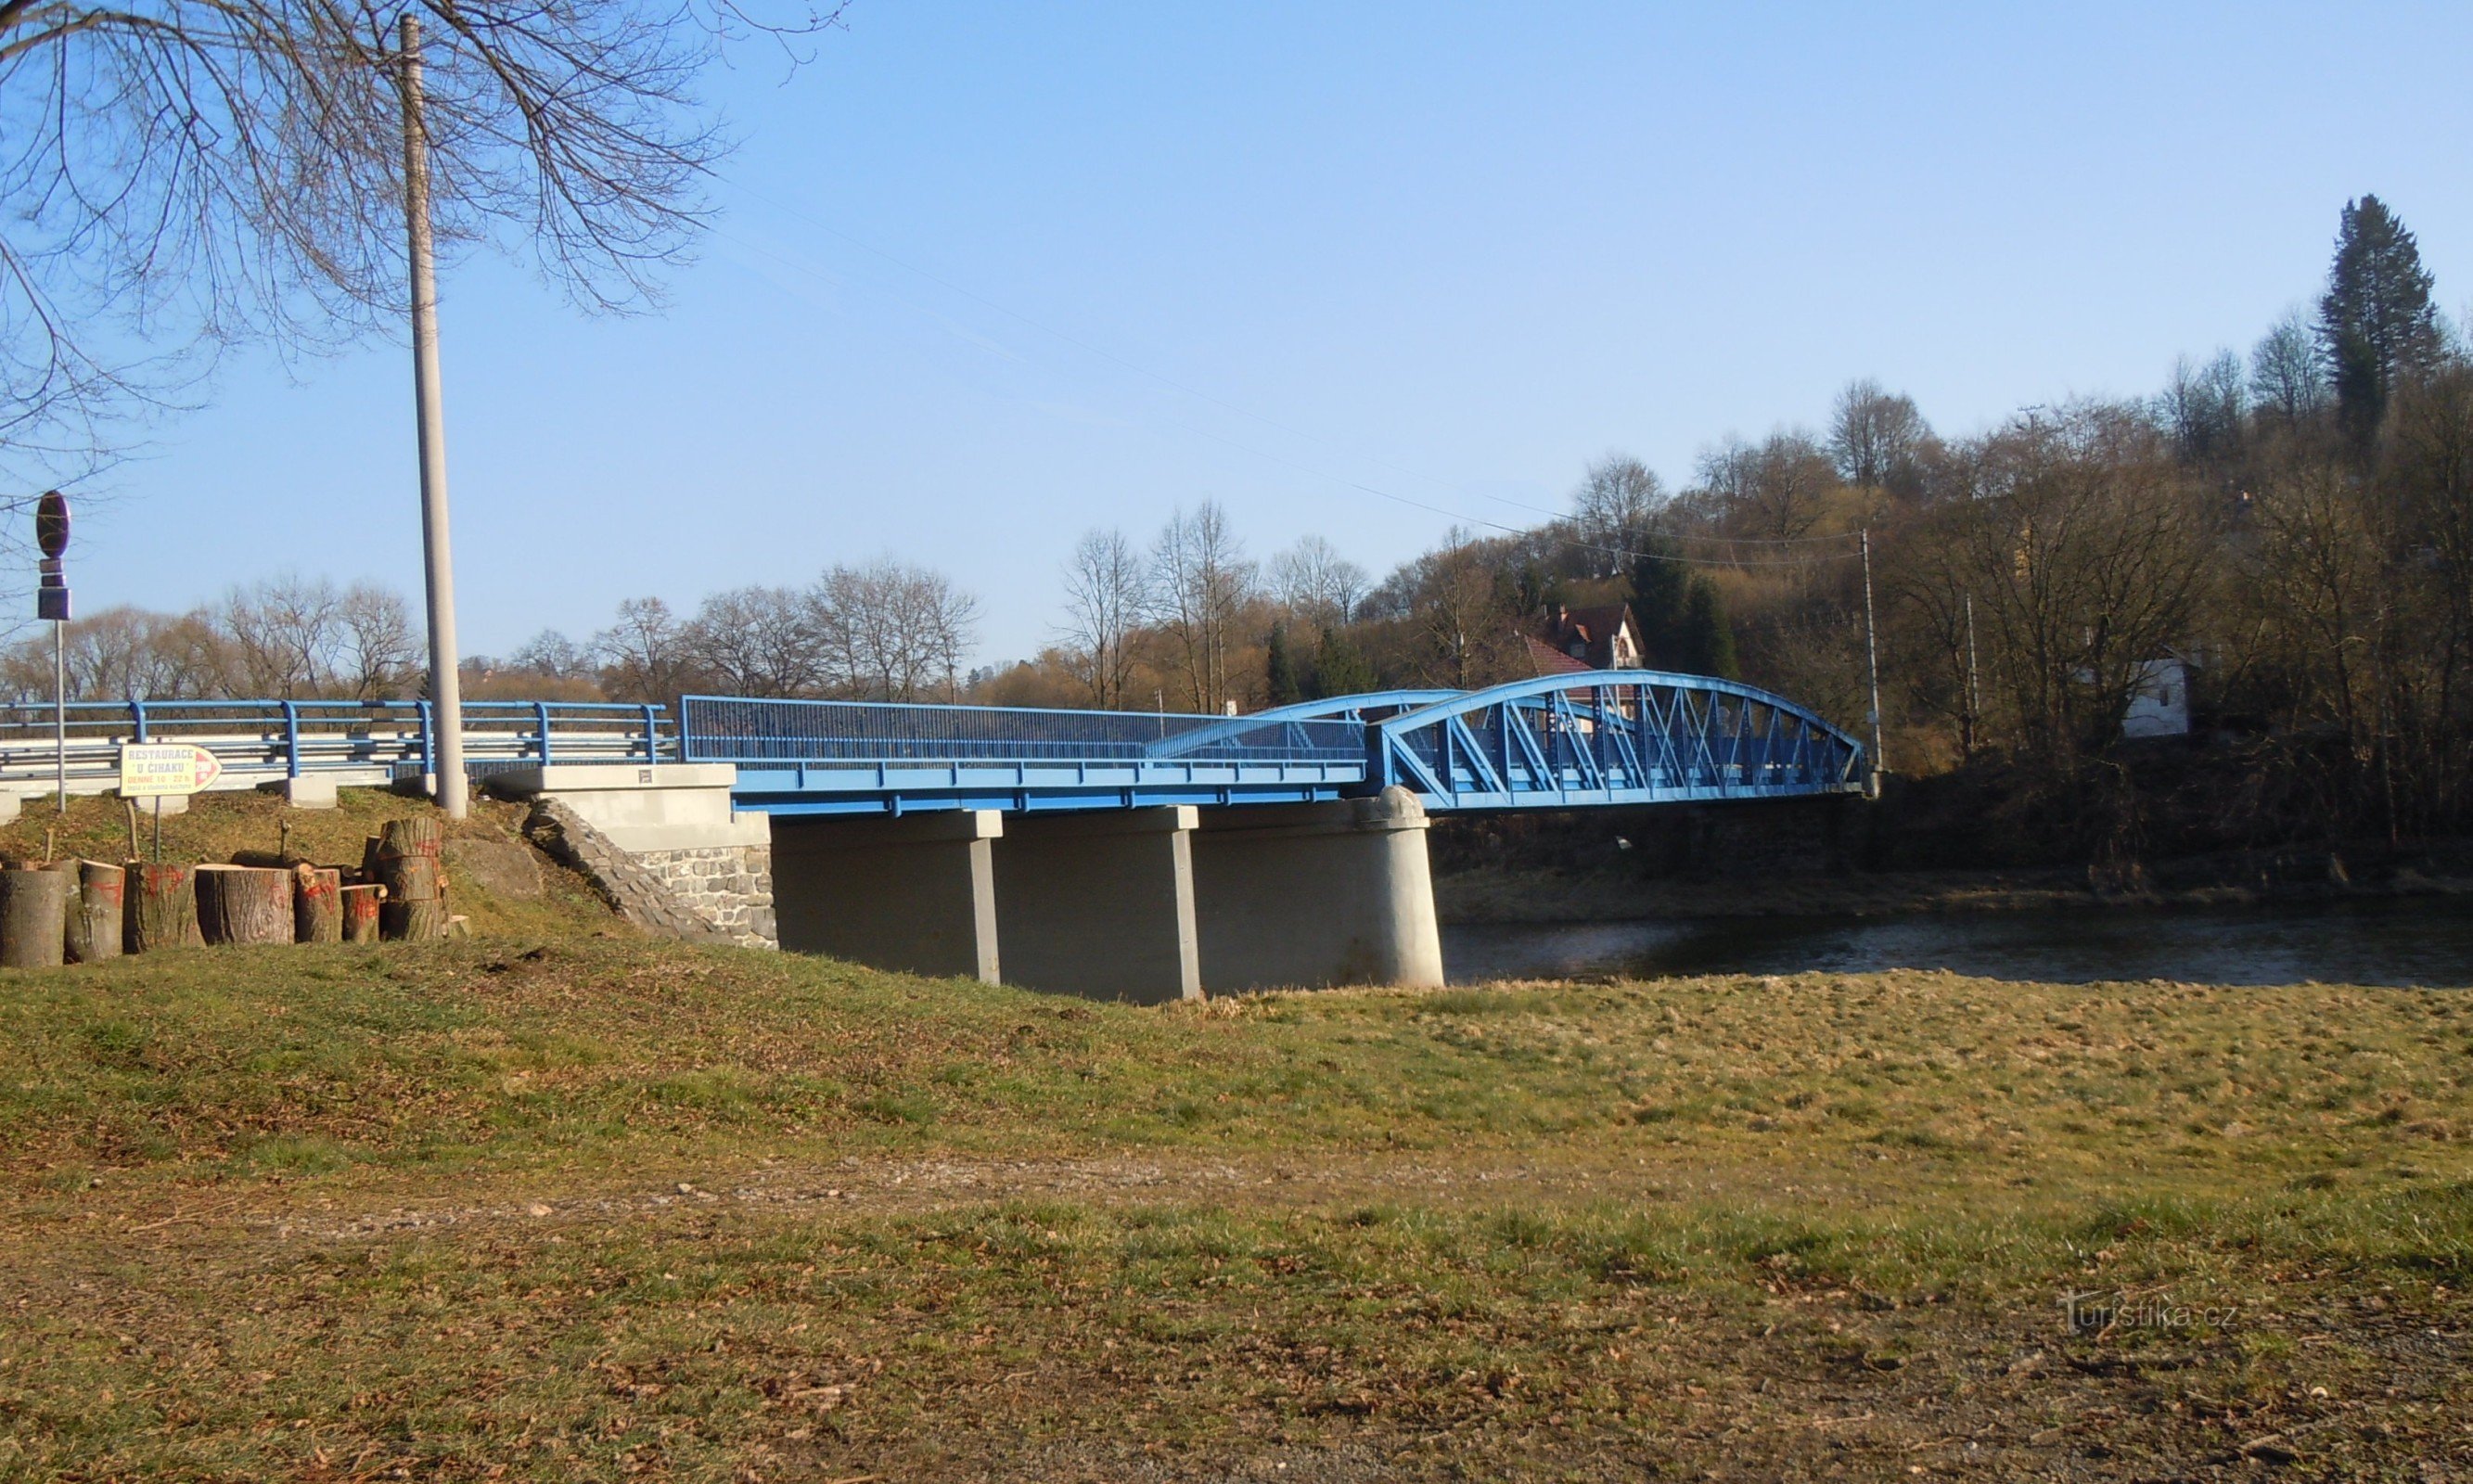 Ledečko - un ponte con un campo nautico